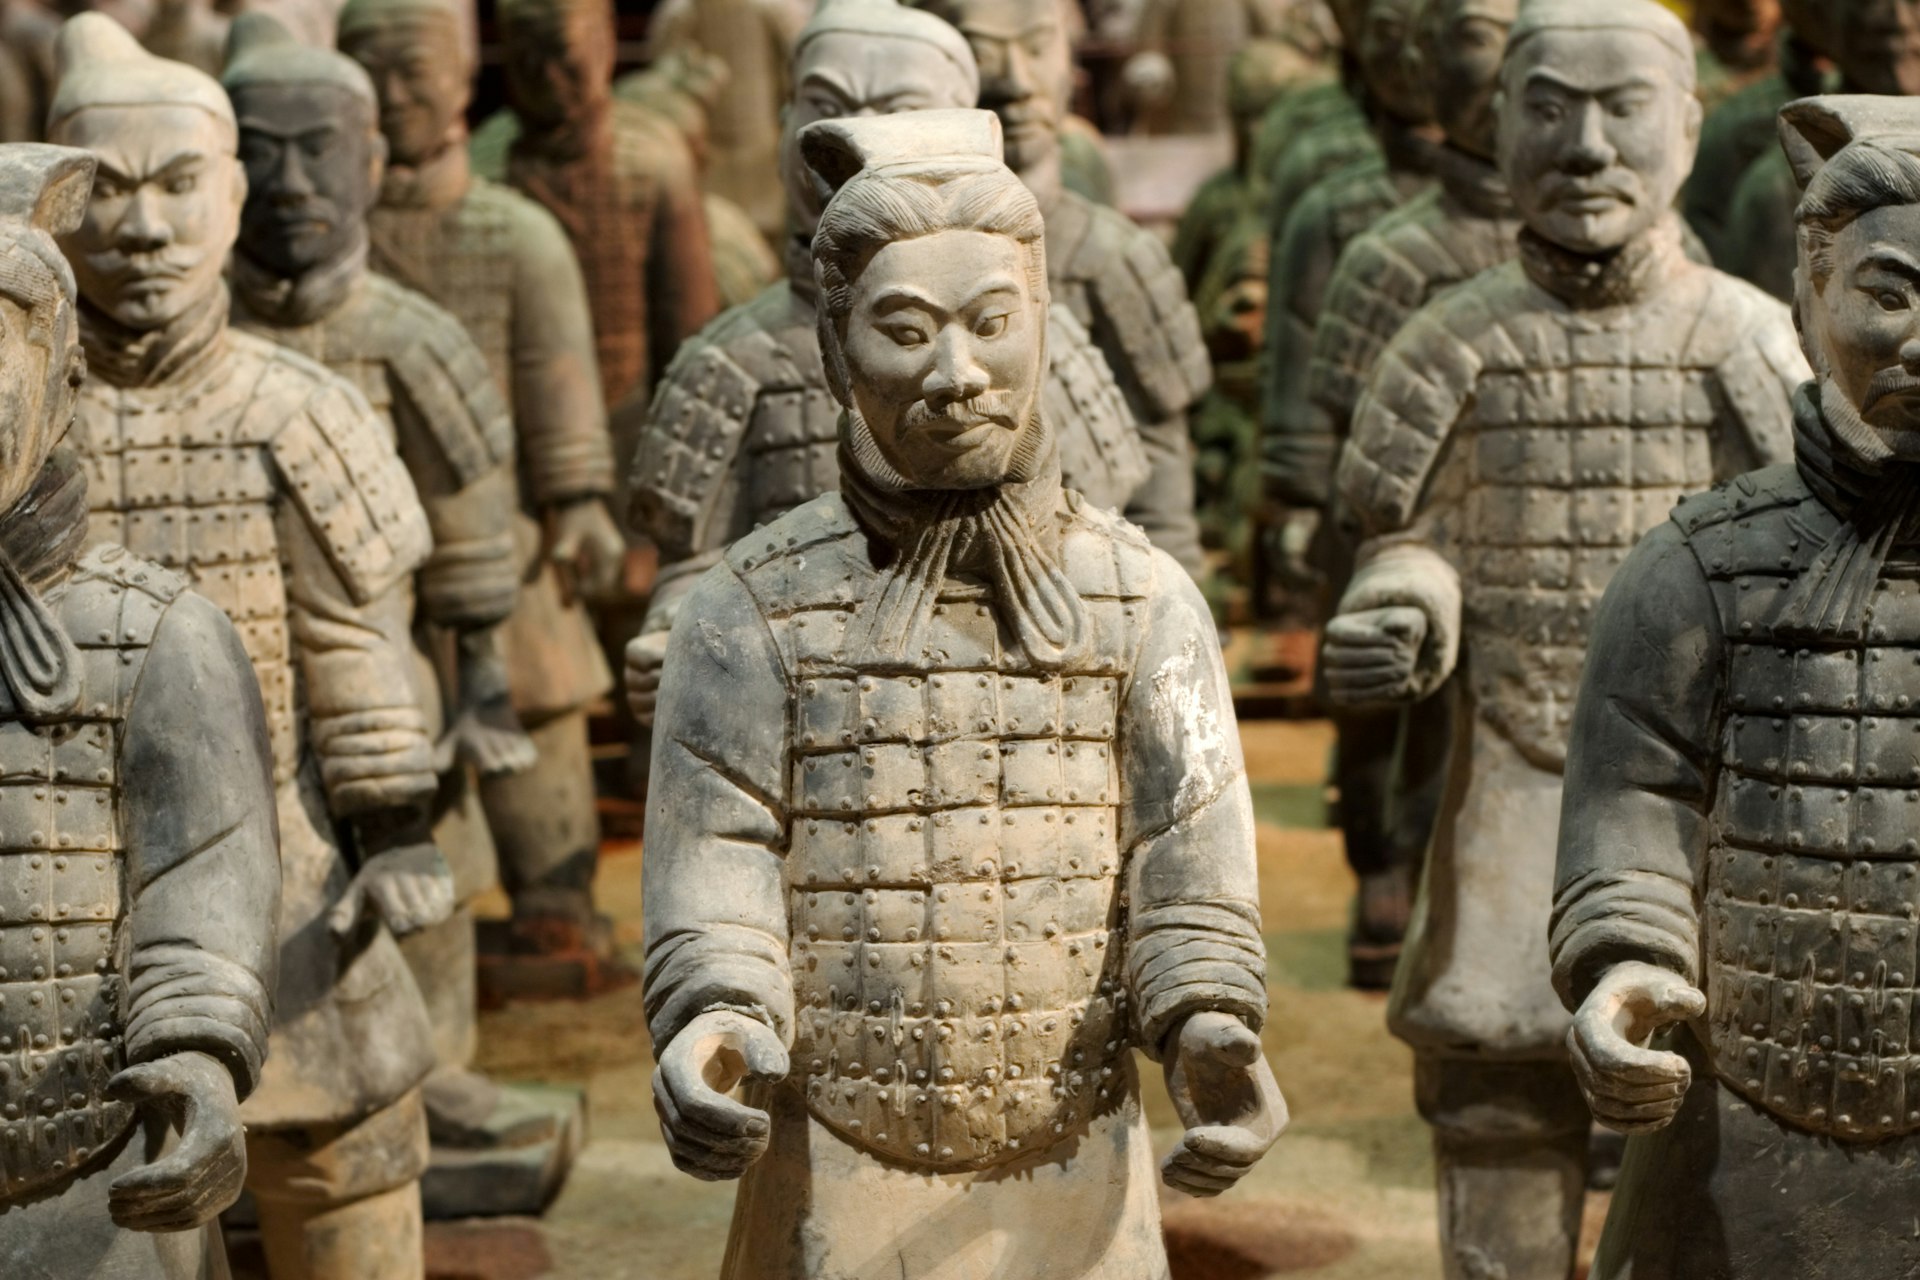 The Terracotta Warriors of Xi’an, China